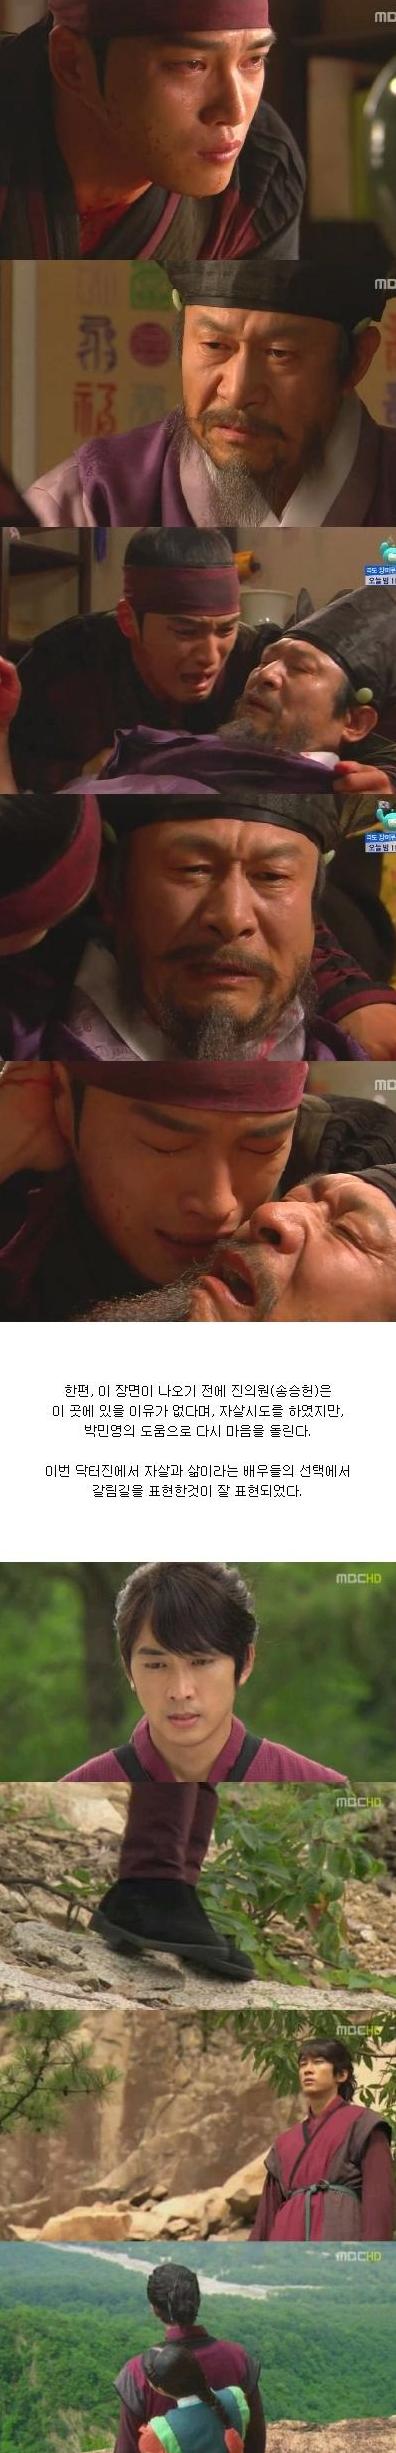 episode 21 captures for the Korean drama 'Dr. JIN'